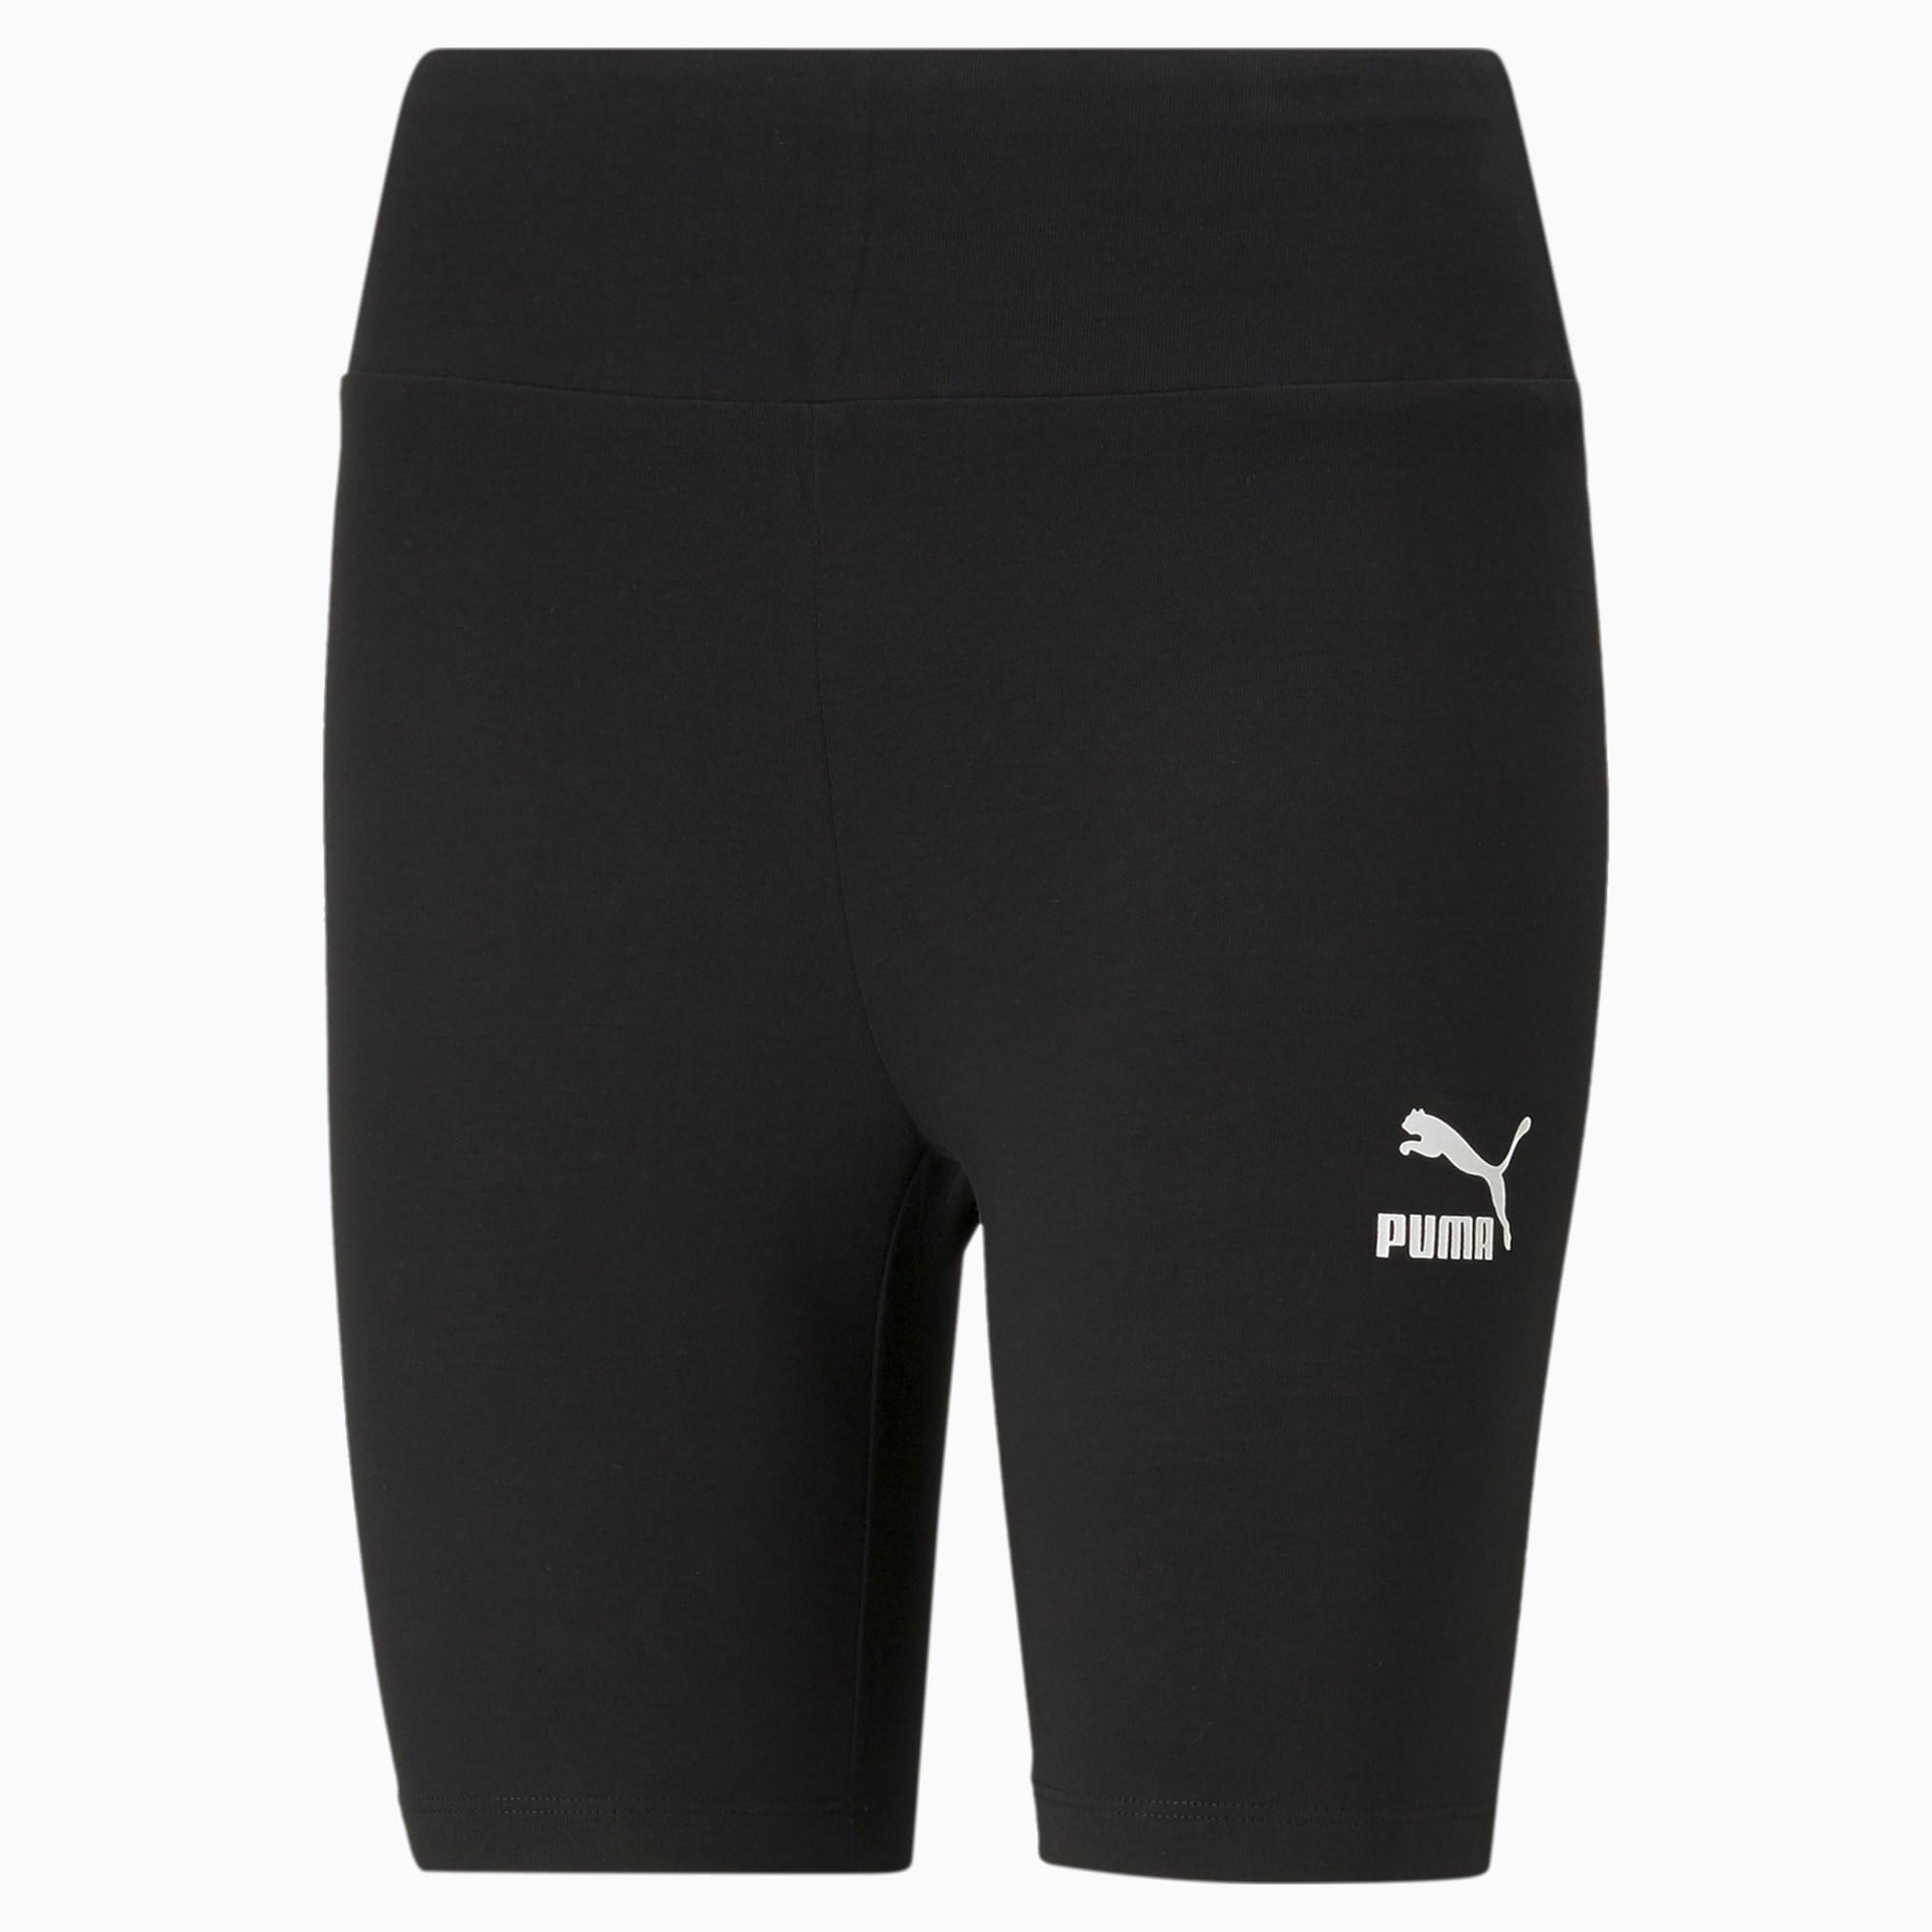 PUMA Classics shiny legging shorts in dark blue - exclusive to